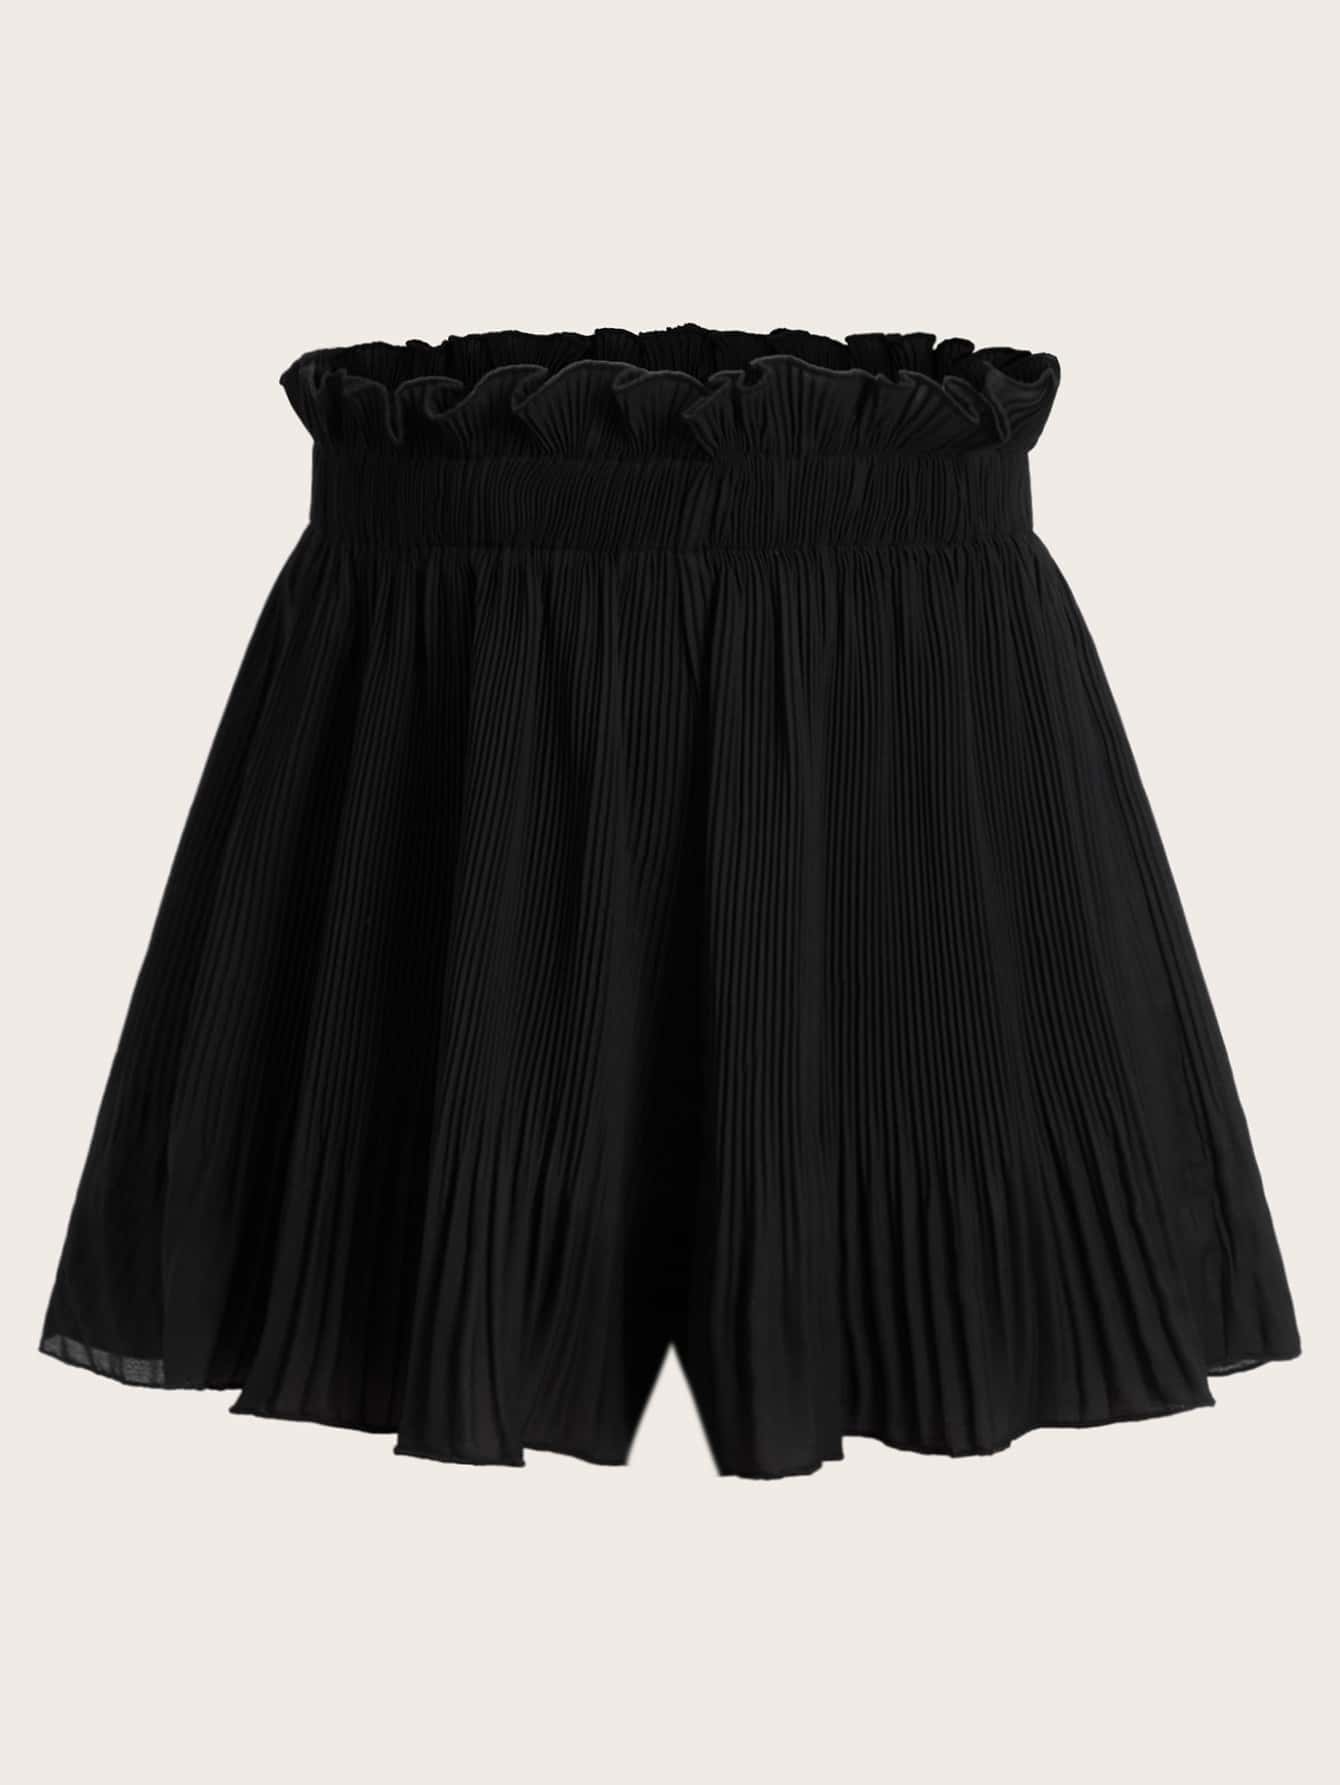 Muybonita.co Bohemios Negro / XS Shorts fruncido de cintura fruncido